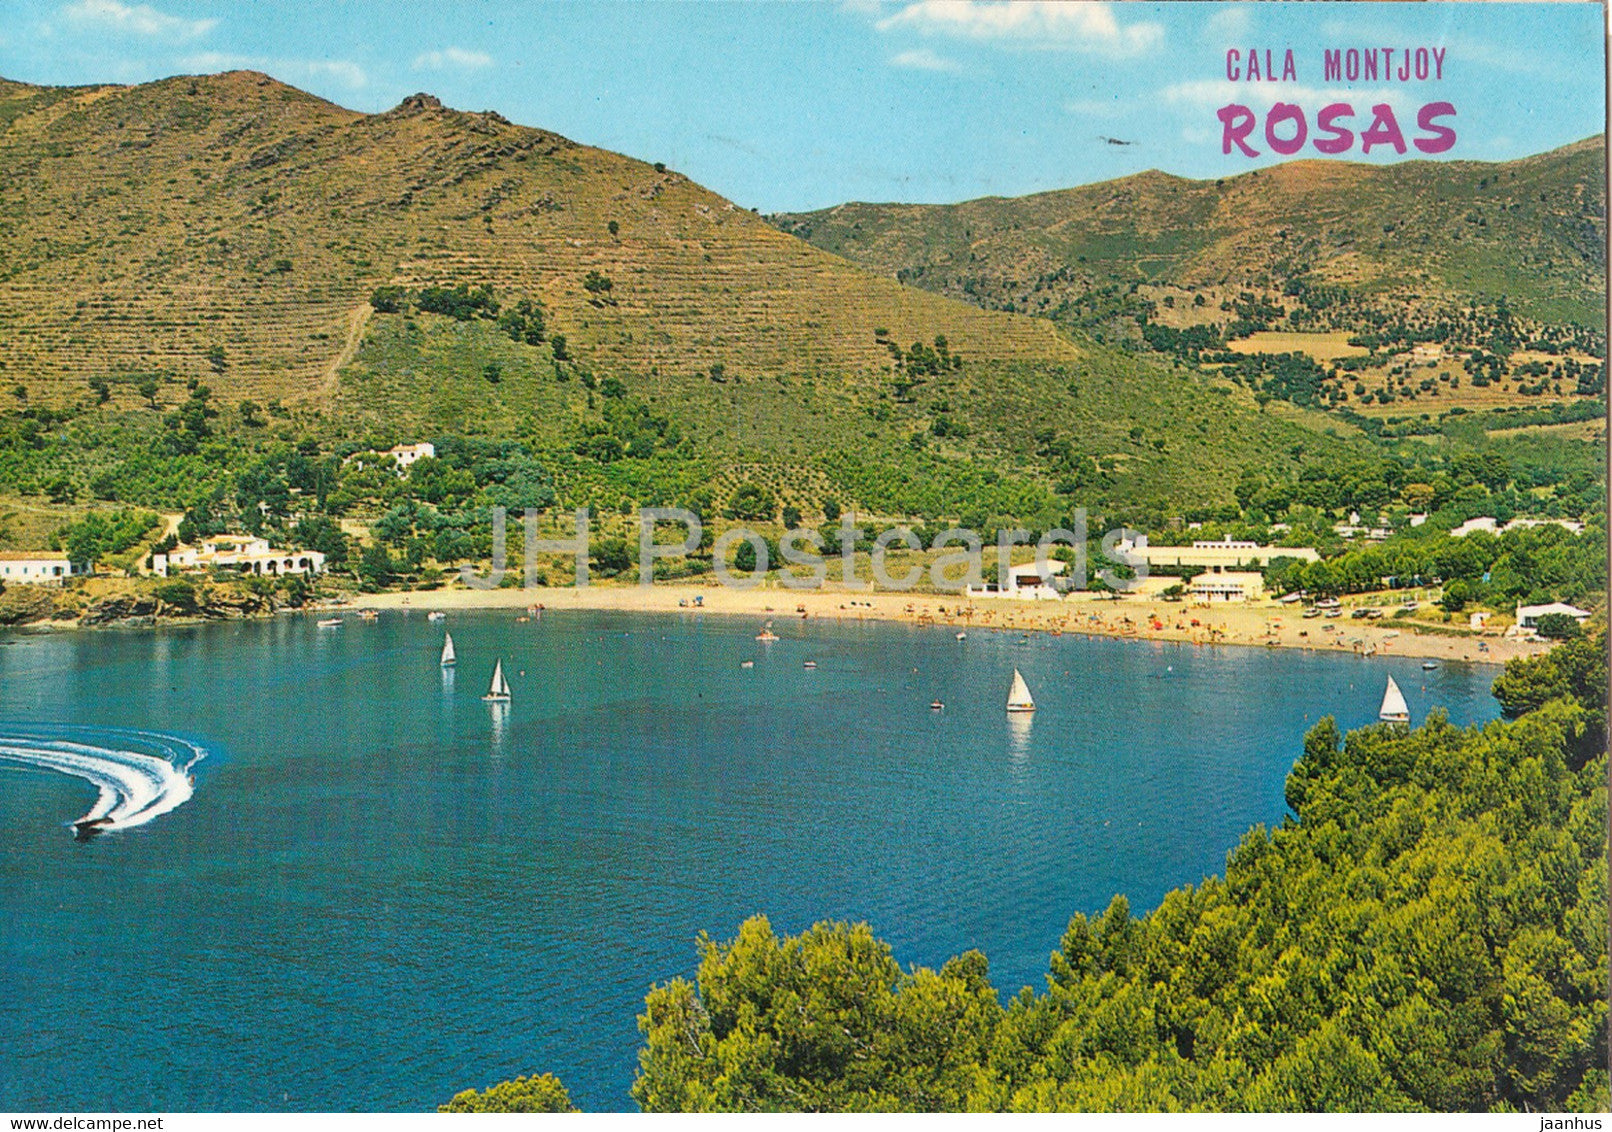 Rosas - Costa Brava - Deporte Nautico en Cala Montjoy - water sports - beach - 1977 - Spain - used - JH Postcards